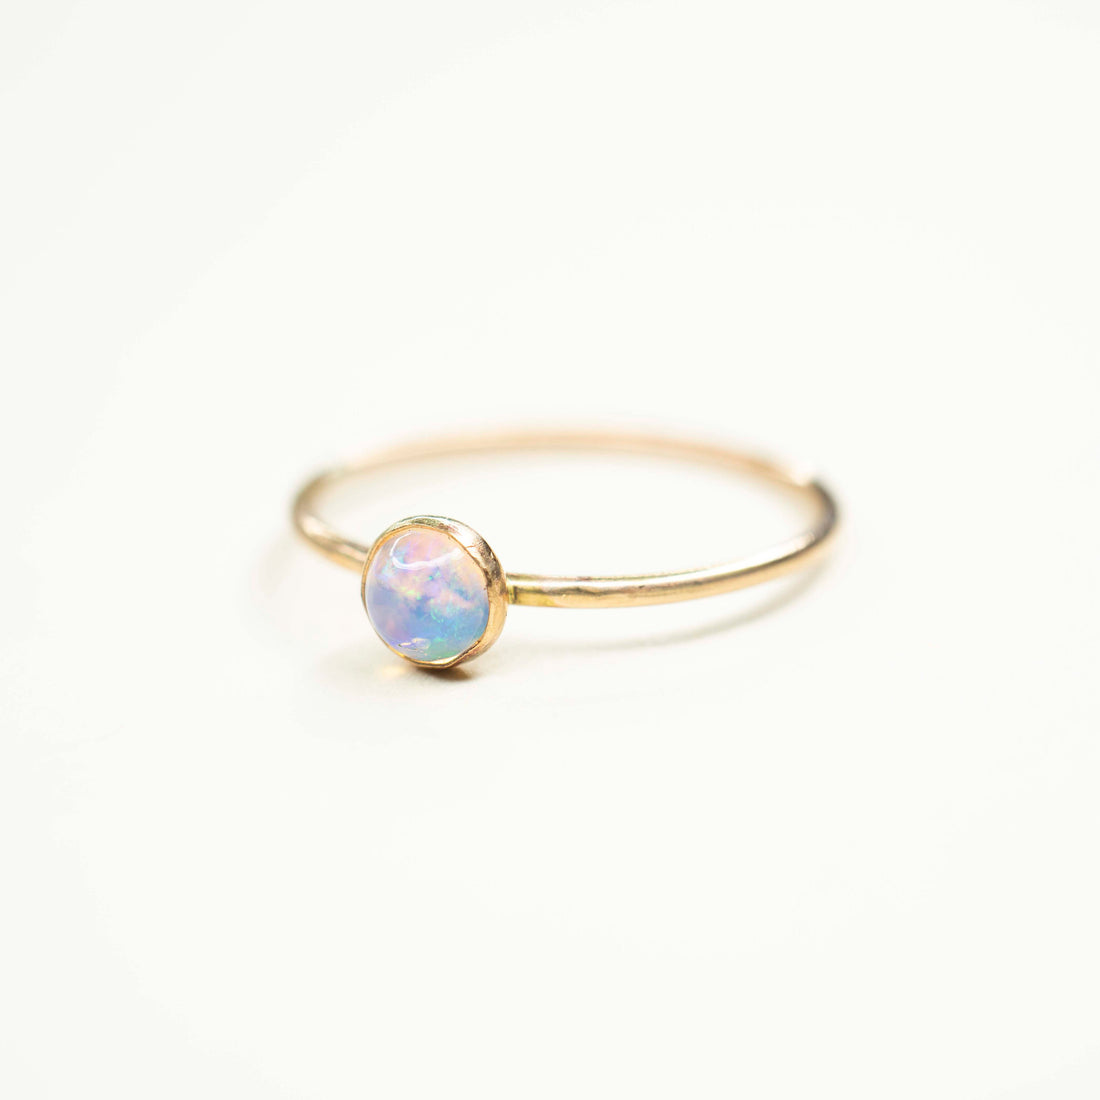 Tiny Gold Opal Ring, Gold Opal Ring, Natural Opal Ring, 3mm Opal Ring, Handmade Opal Ring, Dainty Opal Ring, Gemstone Ring, Simple Opal Ring